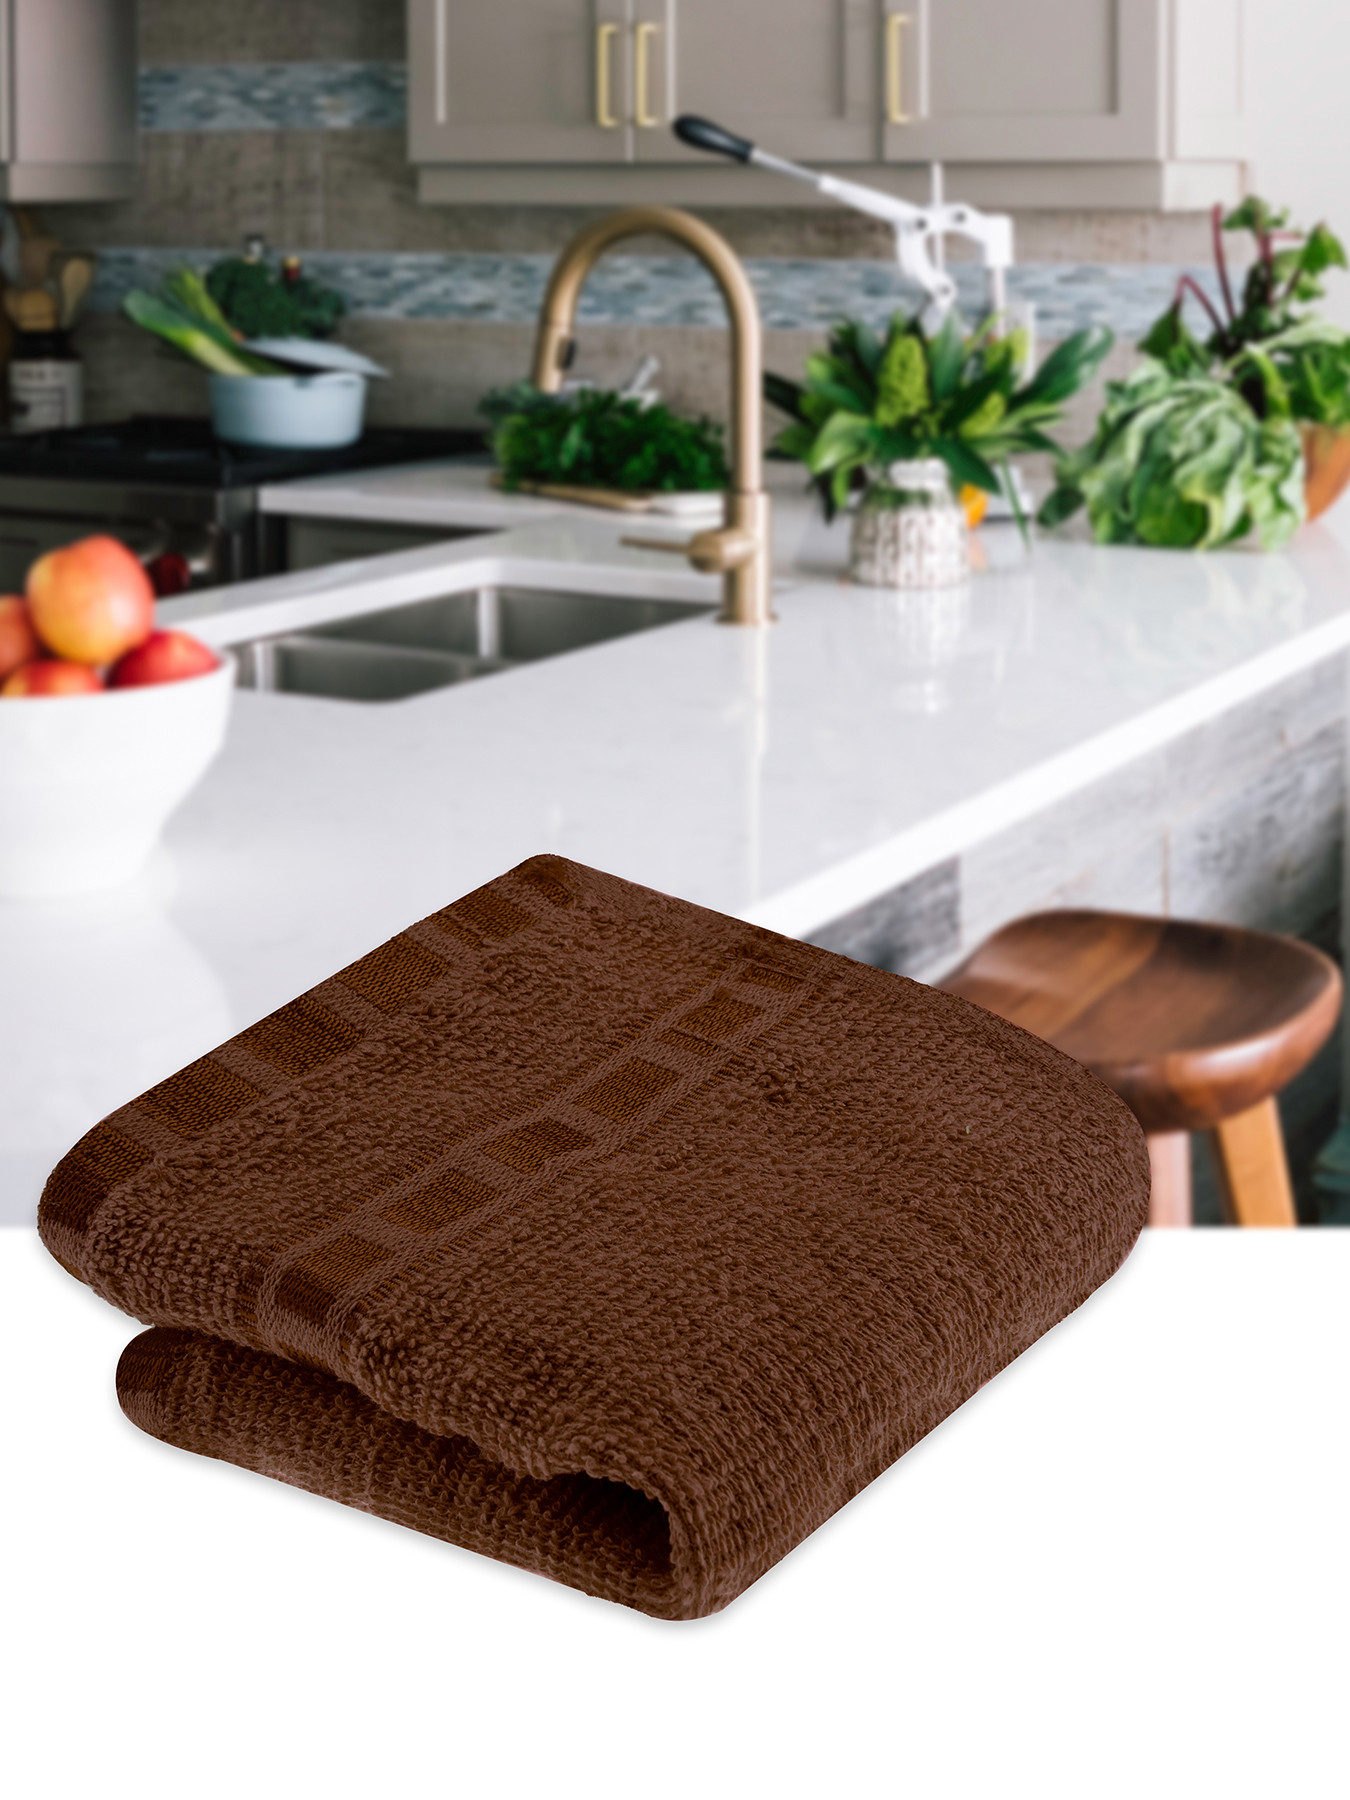 Kuber Industries Towel Handkerchief | Cotton Face Towel | Face Towel | Sweat Absorbent Handkerchief | Unisex Plain Hanky | Face Towel Hankies |Multicolor